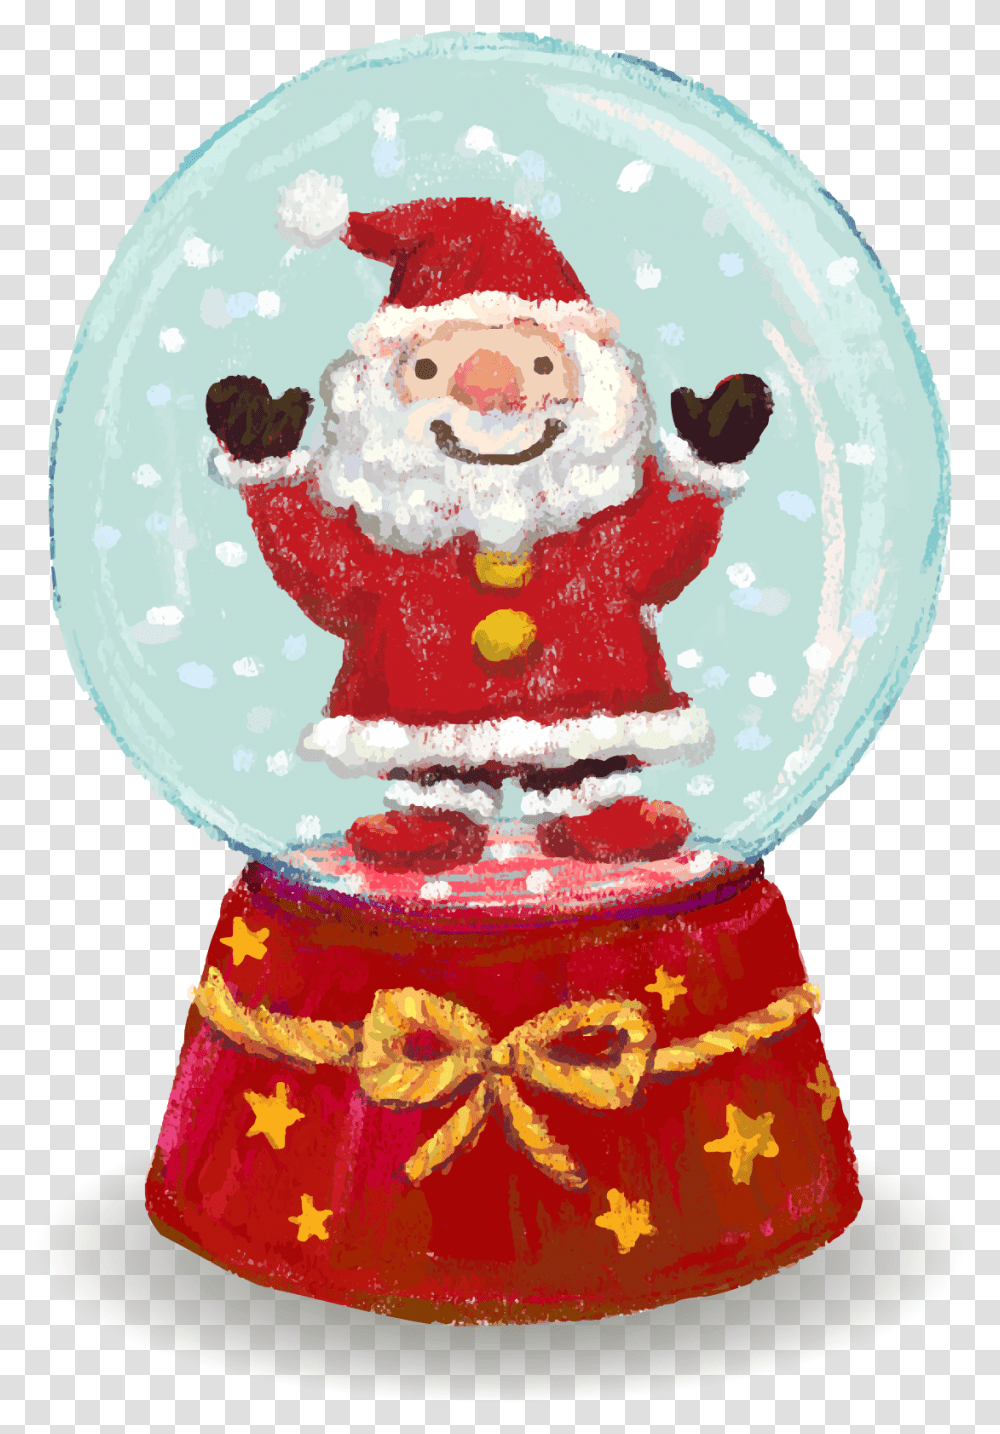 Boule De Nol Vector Christmas Ball Clipart Full Christmas Ball Cartoon Ornaments, Wedding Cake, Food, Snowman, Winter Transparent Png